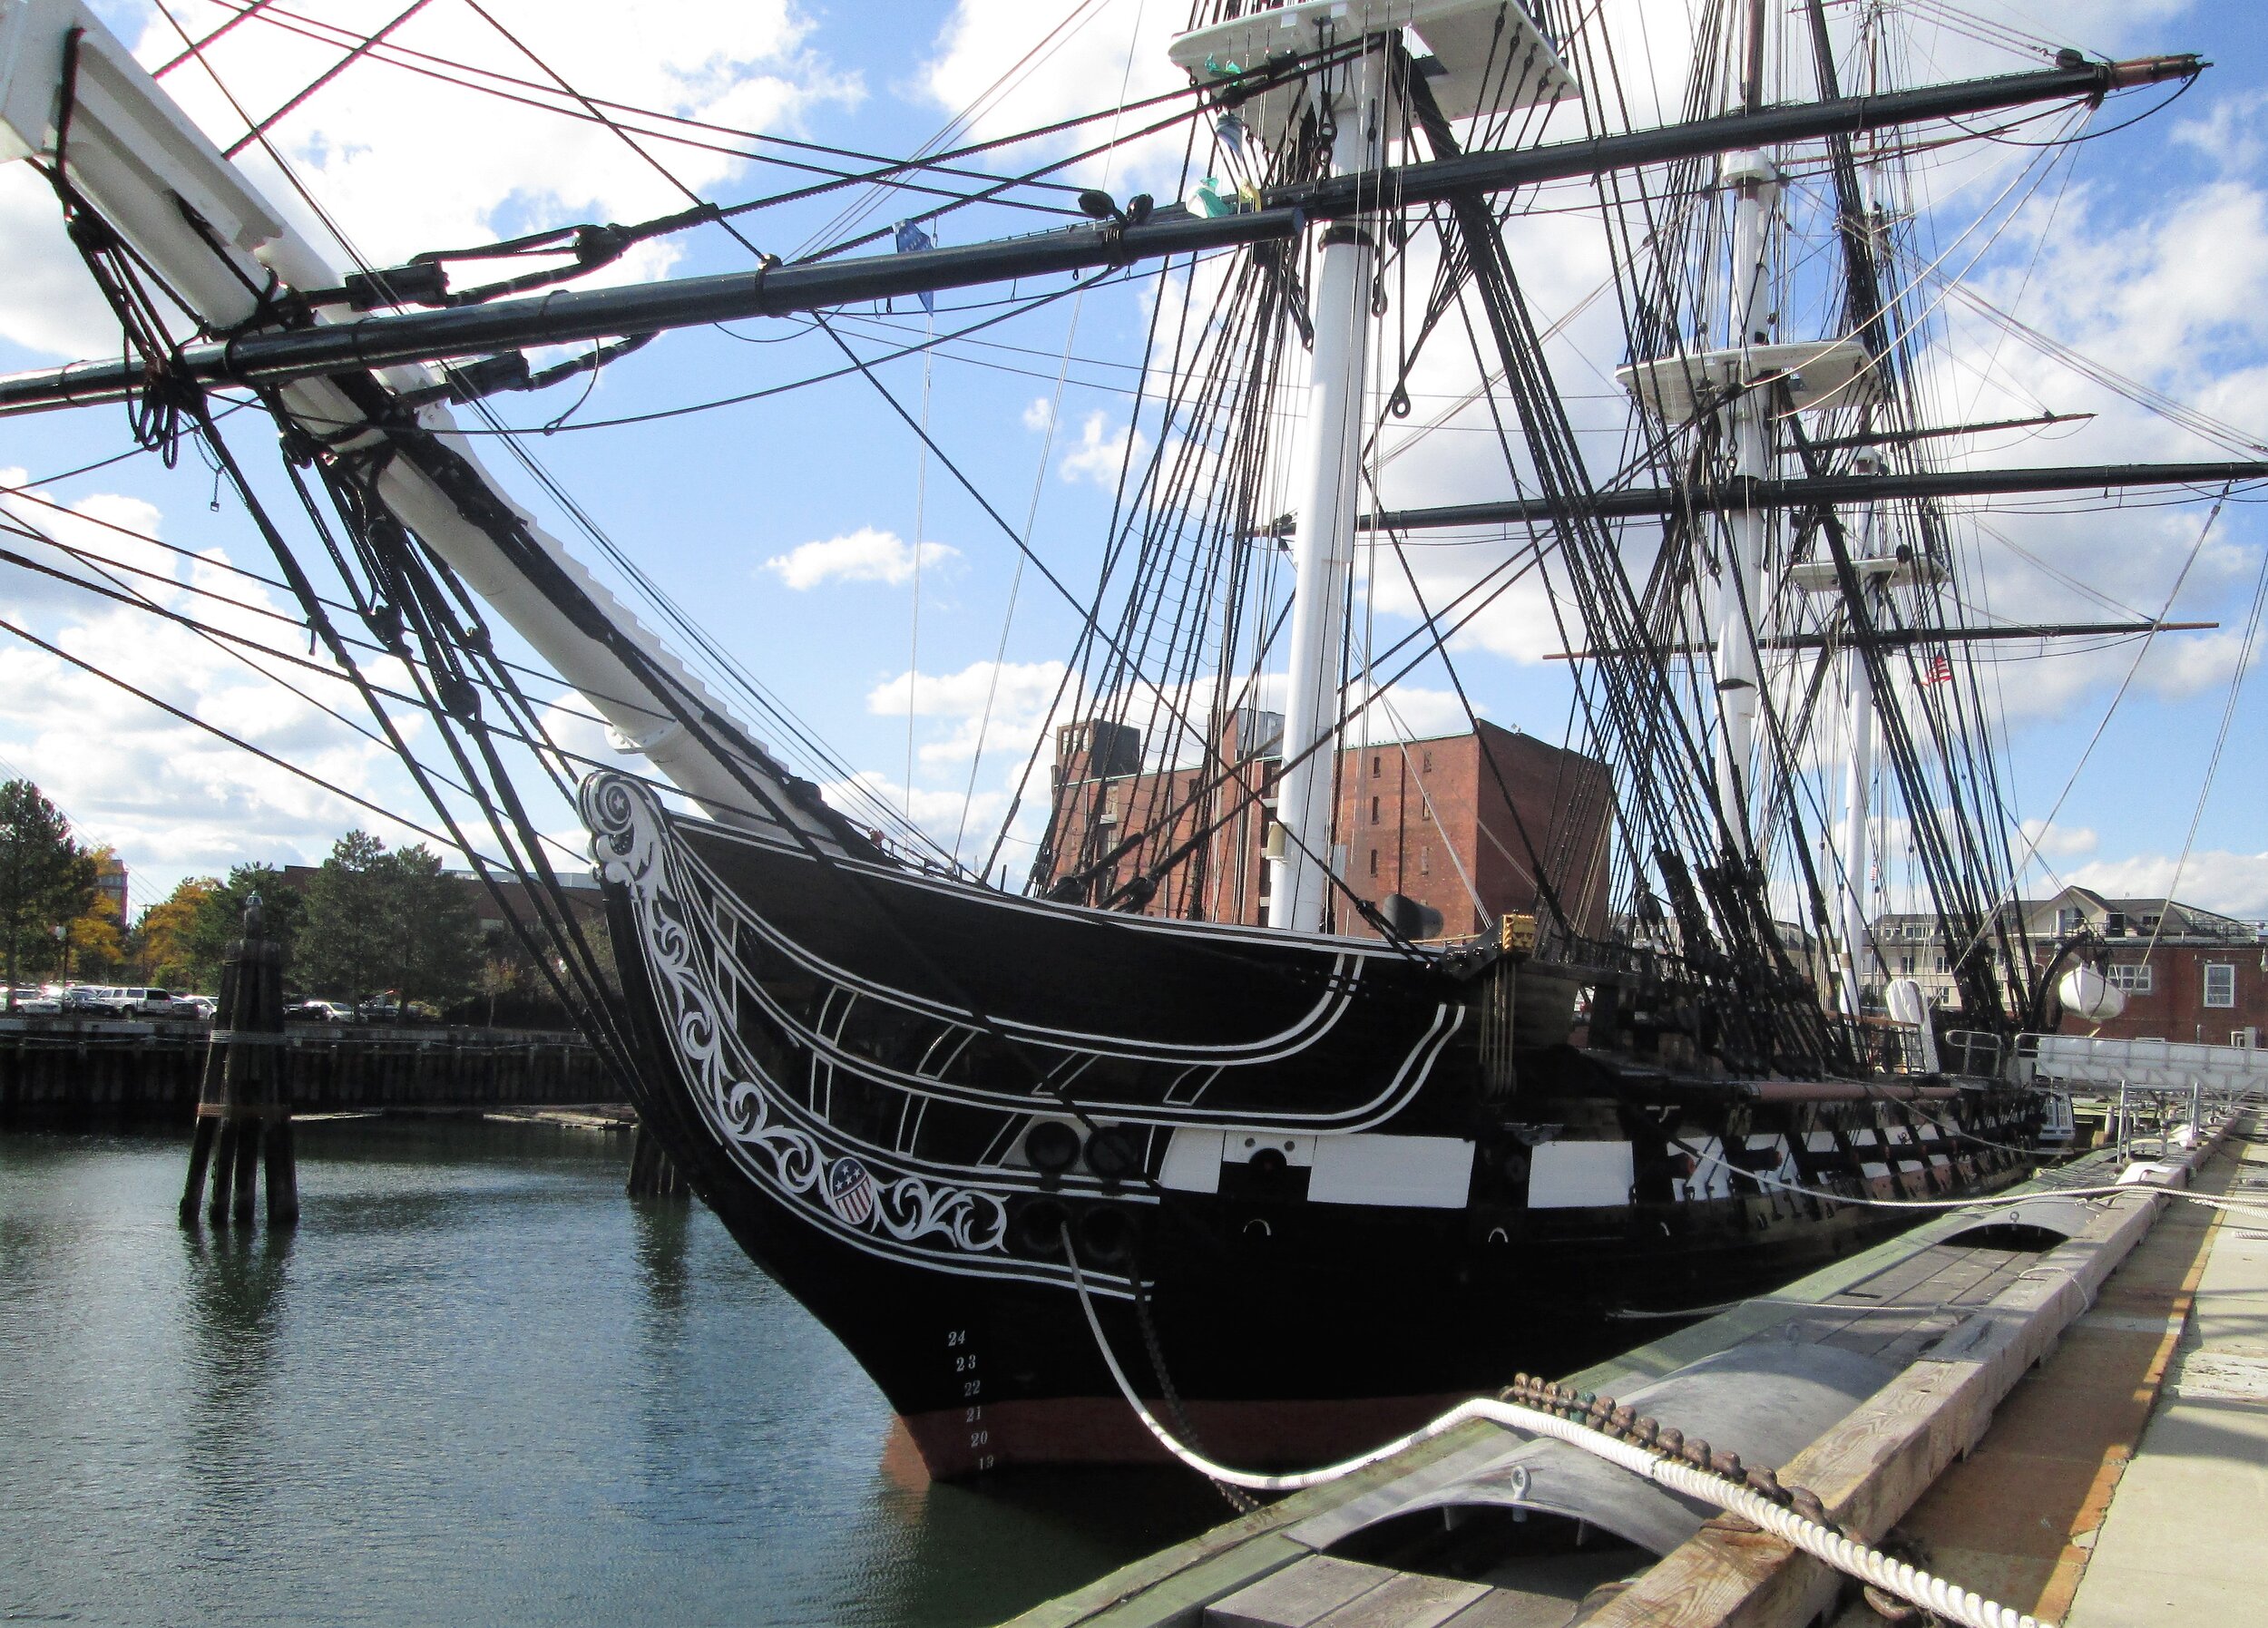  Tours of Boston and Charlestown Navy Yard. 